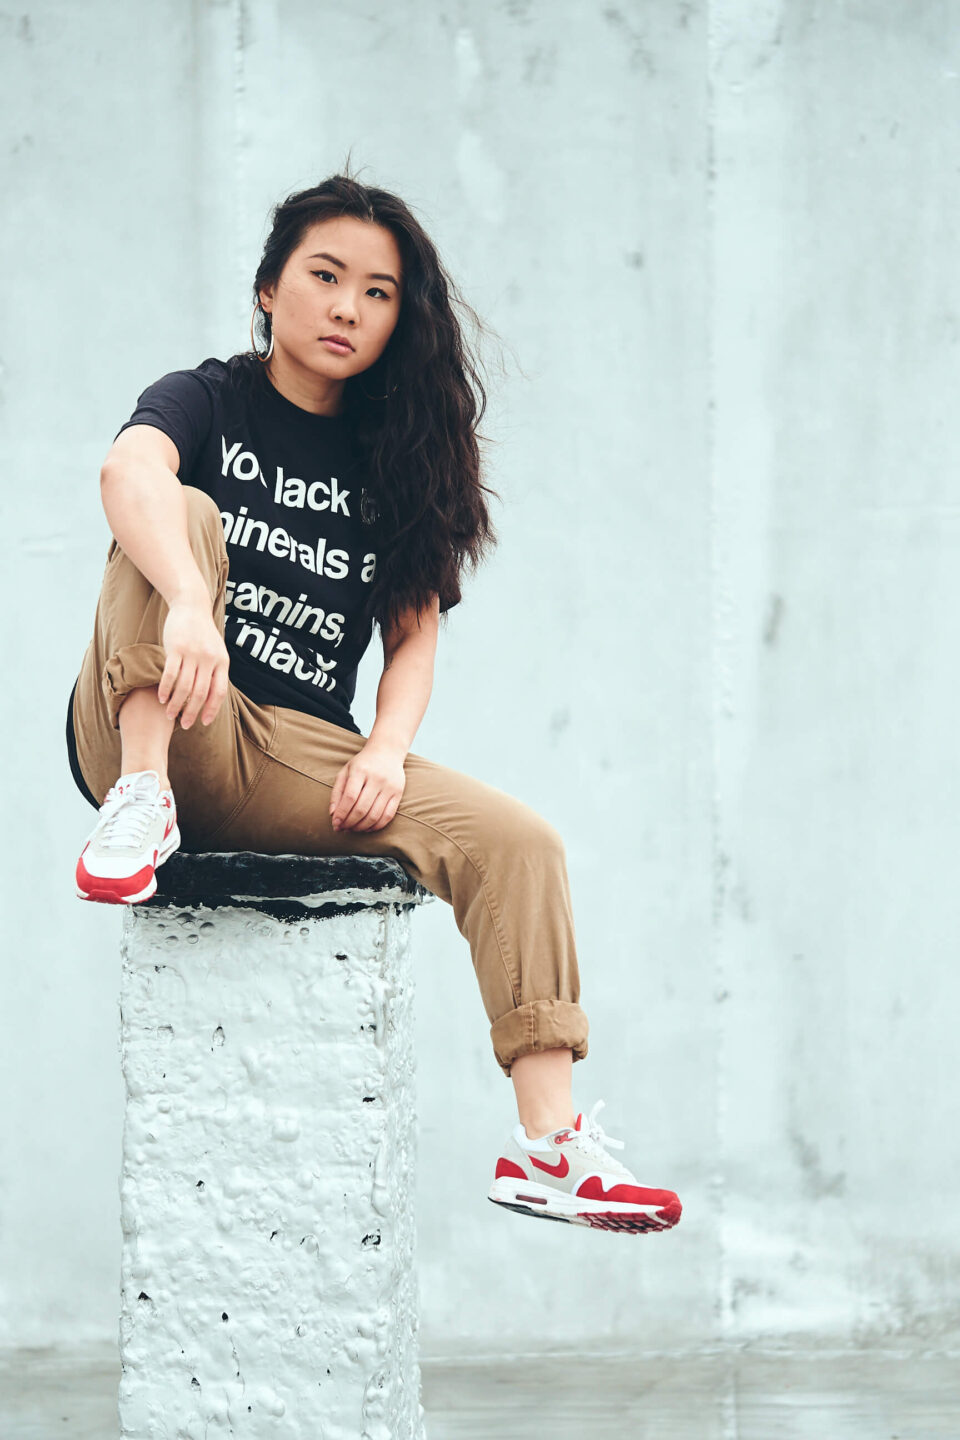 Jessie Wang - oc-ditc-lyric - t-shirt - Fashion Photography - Clothing Brand Photography - Ocean Avenue, Brooklyn, New York